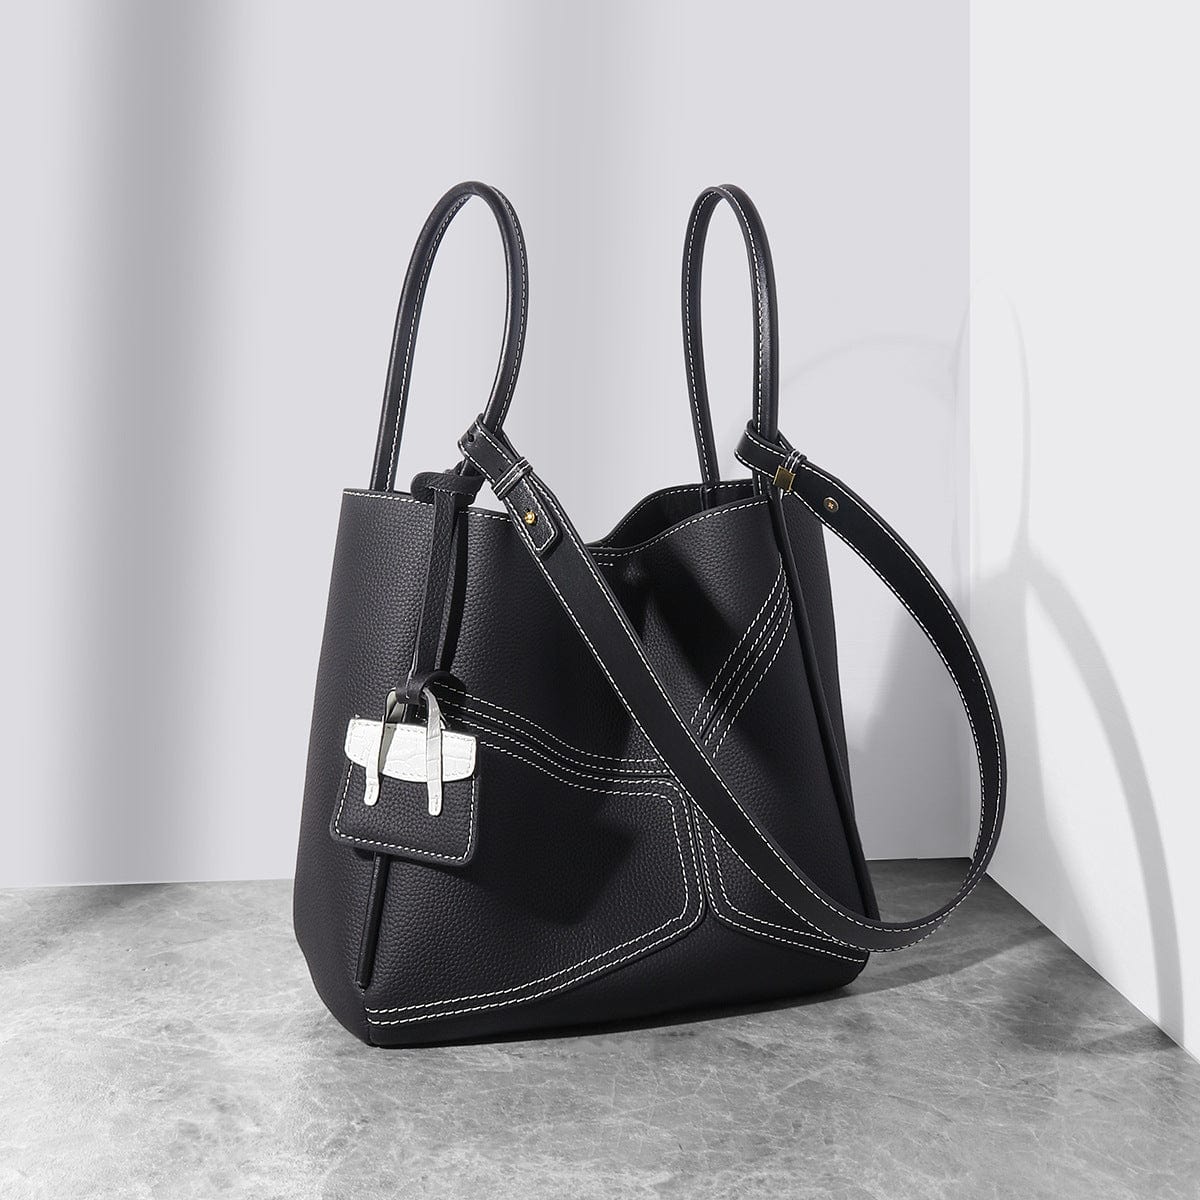 a black handbag with a white cross on it